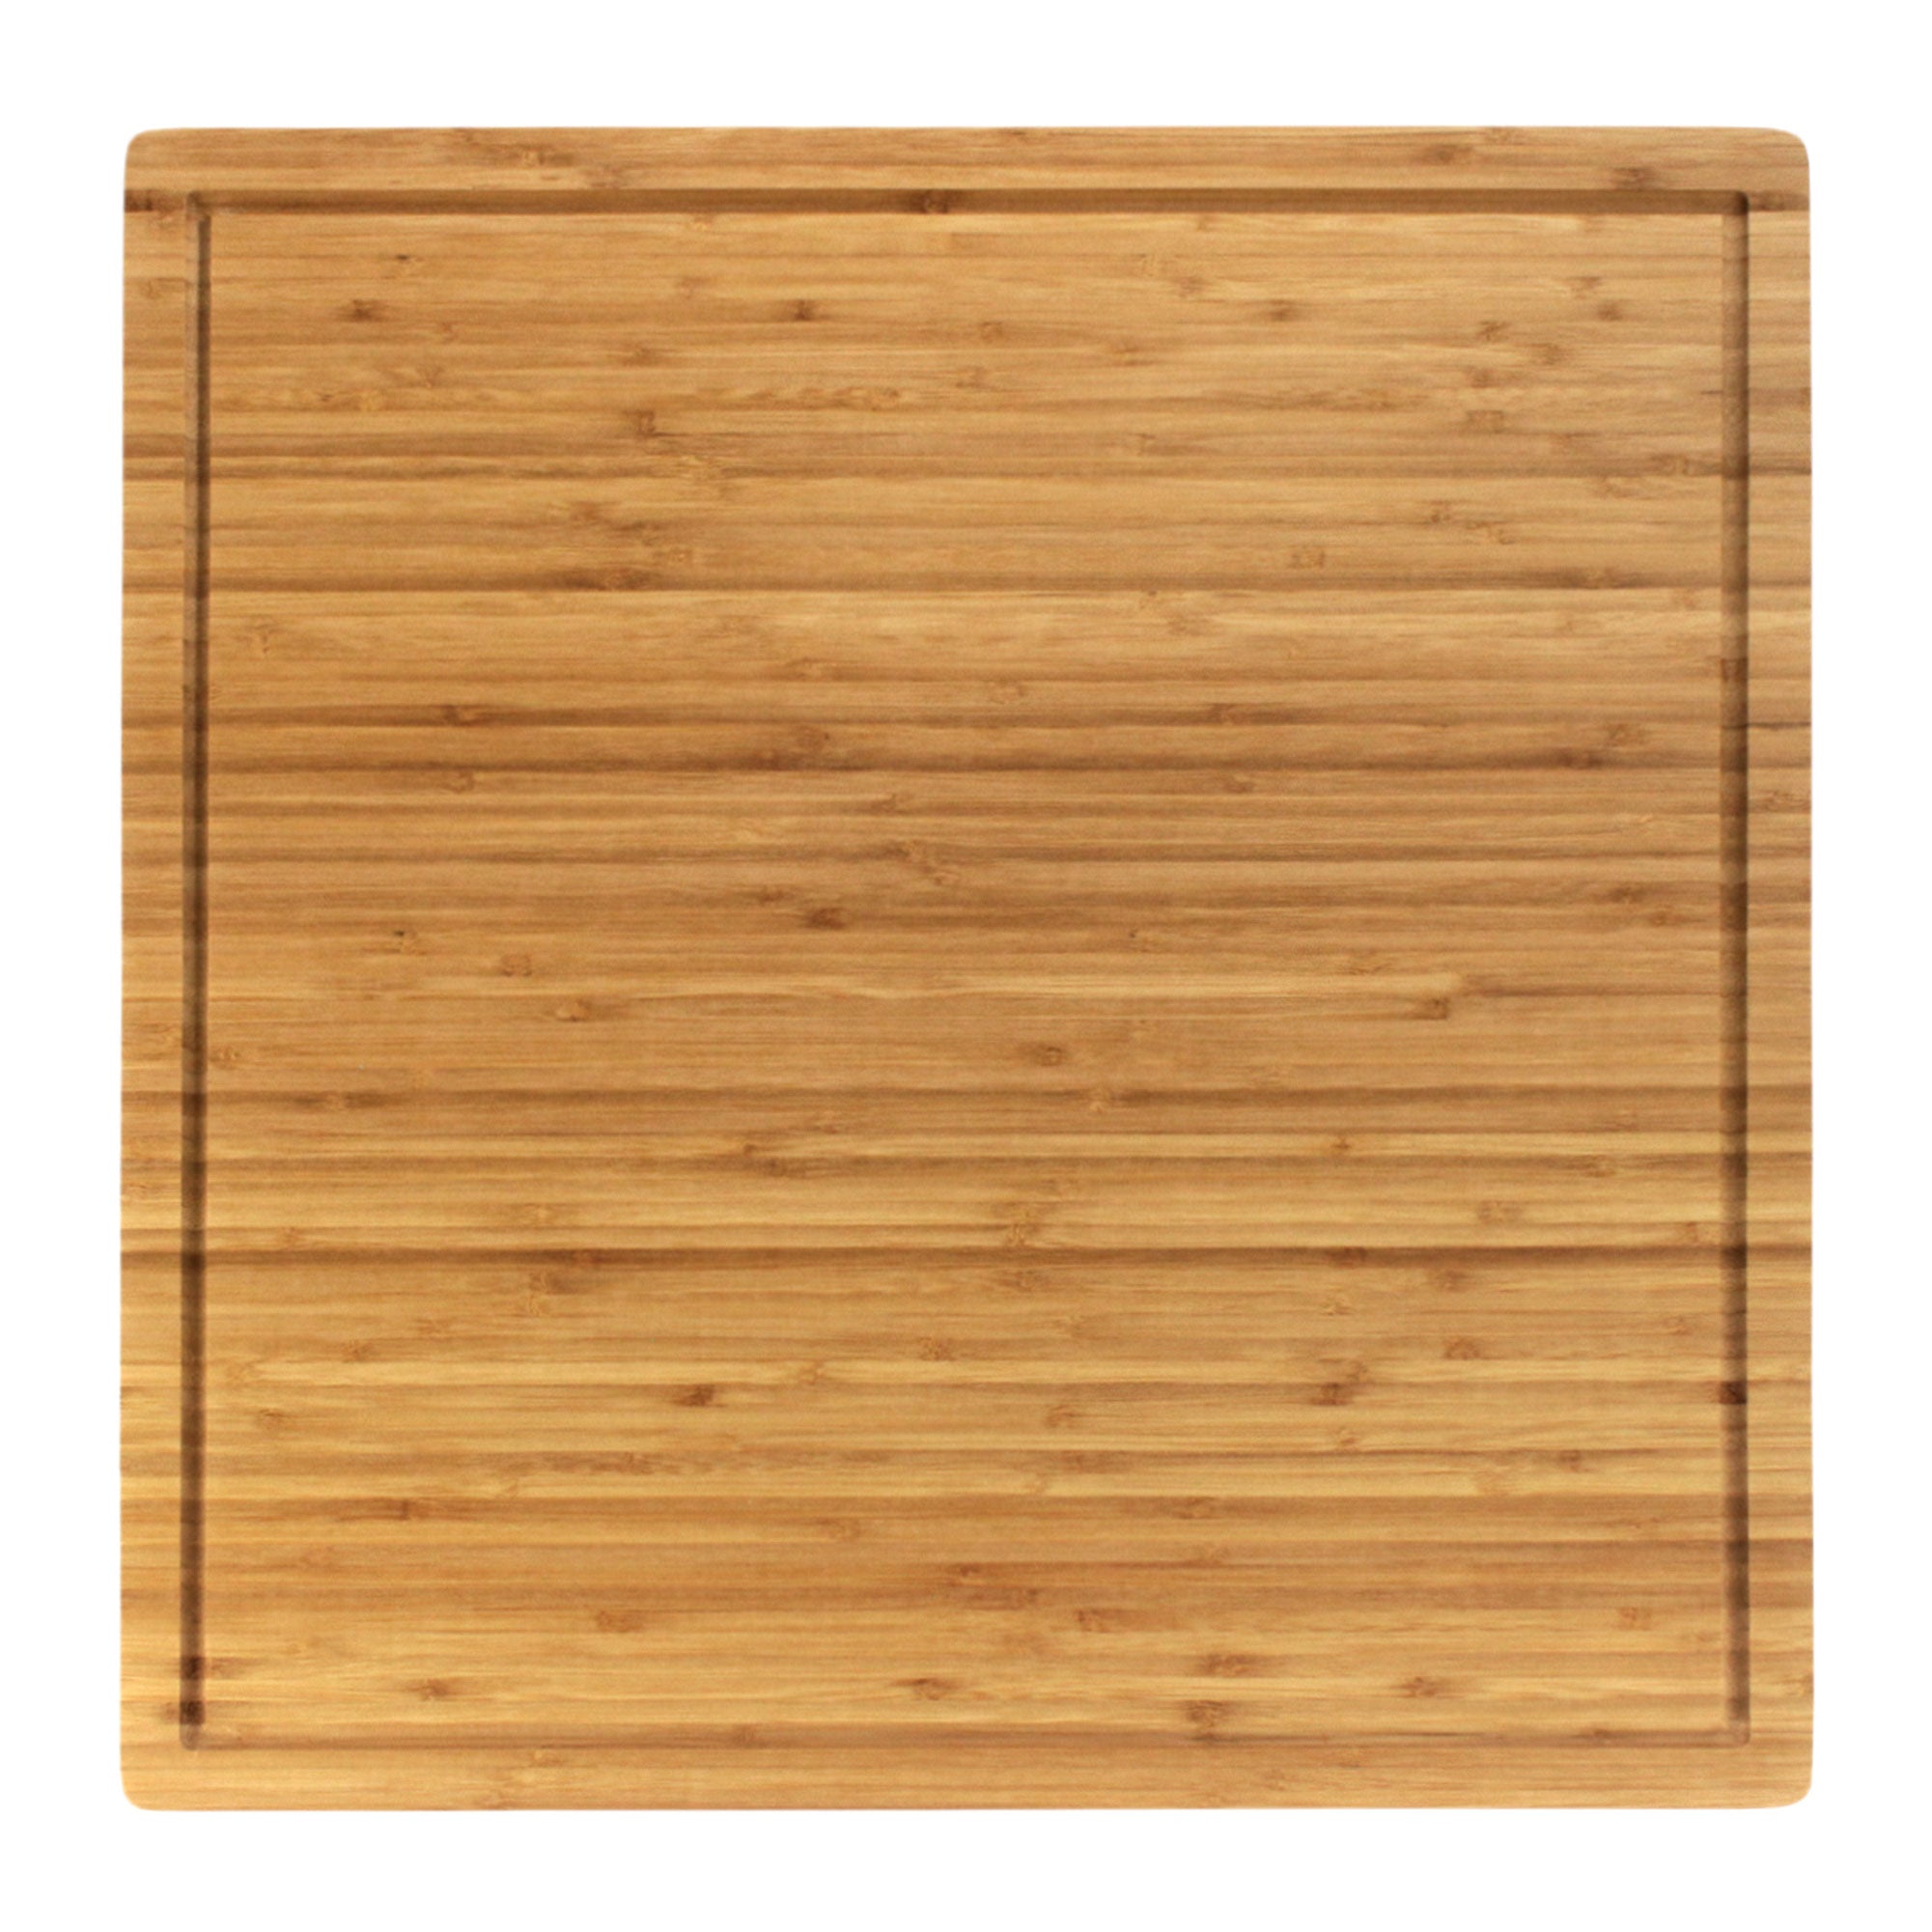 30 x 20 Extra Large Cutting Board, Bamboo Wood Cutting Board for